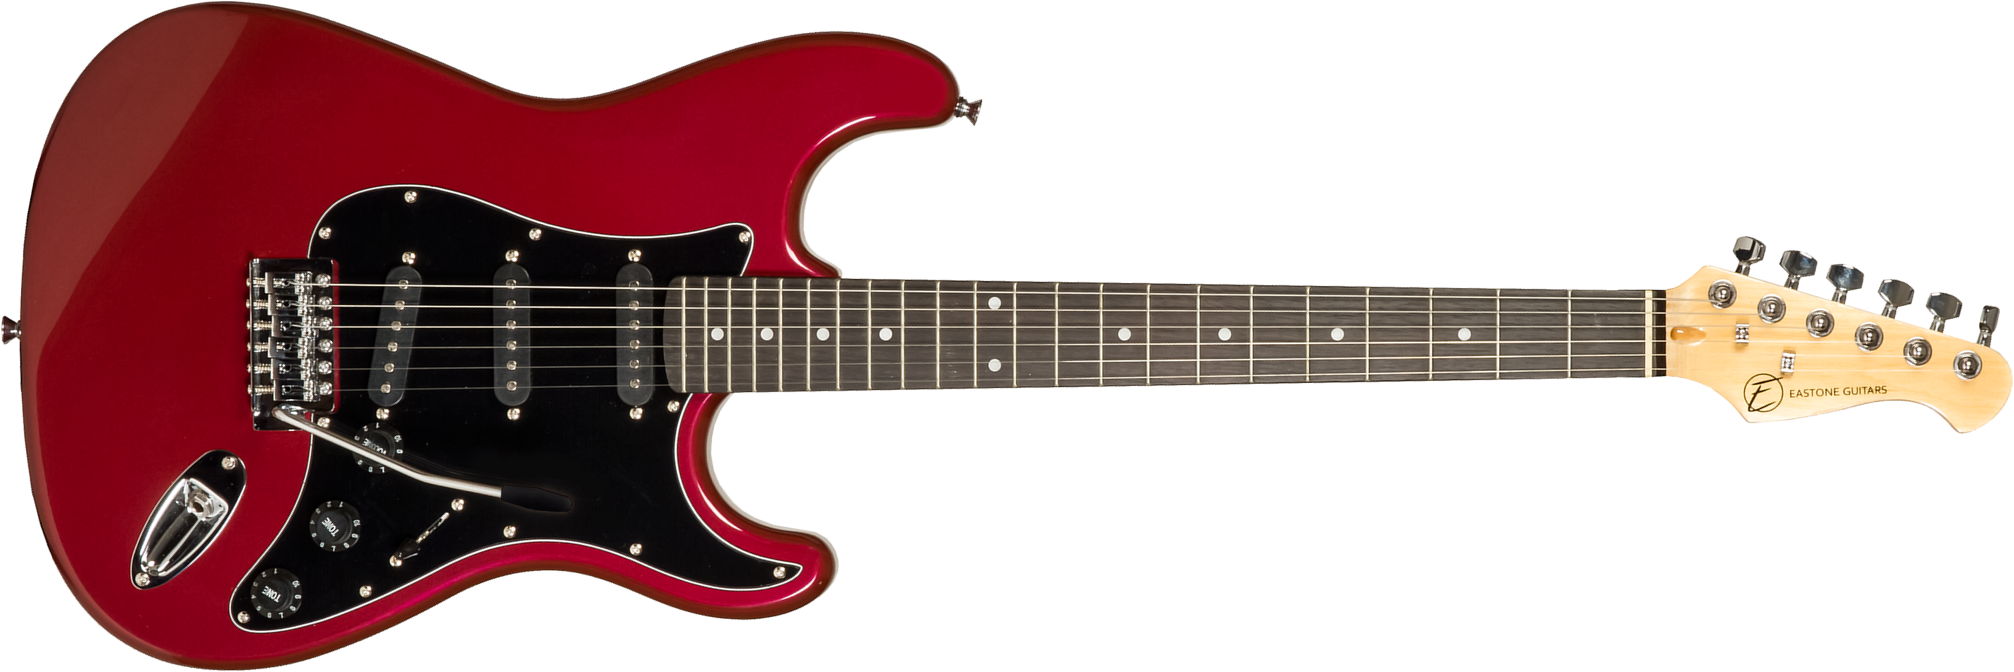 Eastone Str70t 3s Trem Pur - Dark Red - Guitarra eléctrica con forma de str. - Main picture